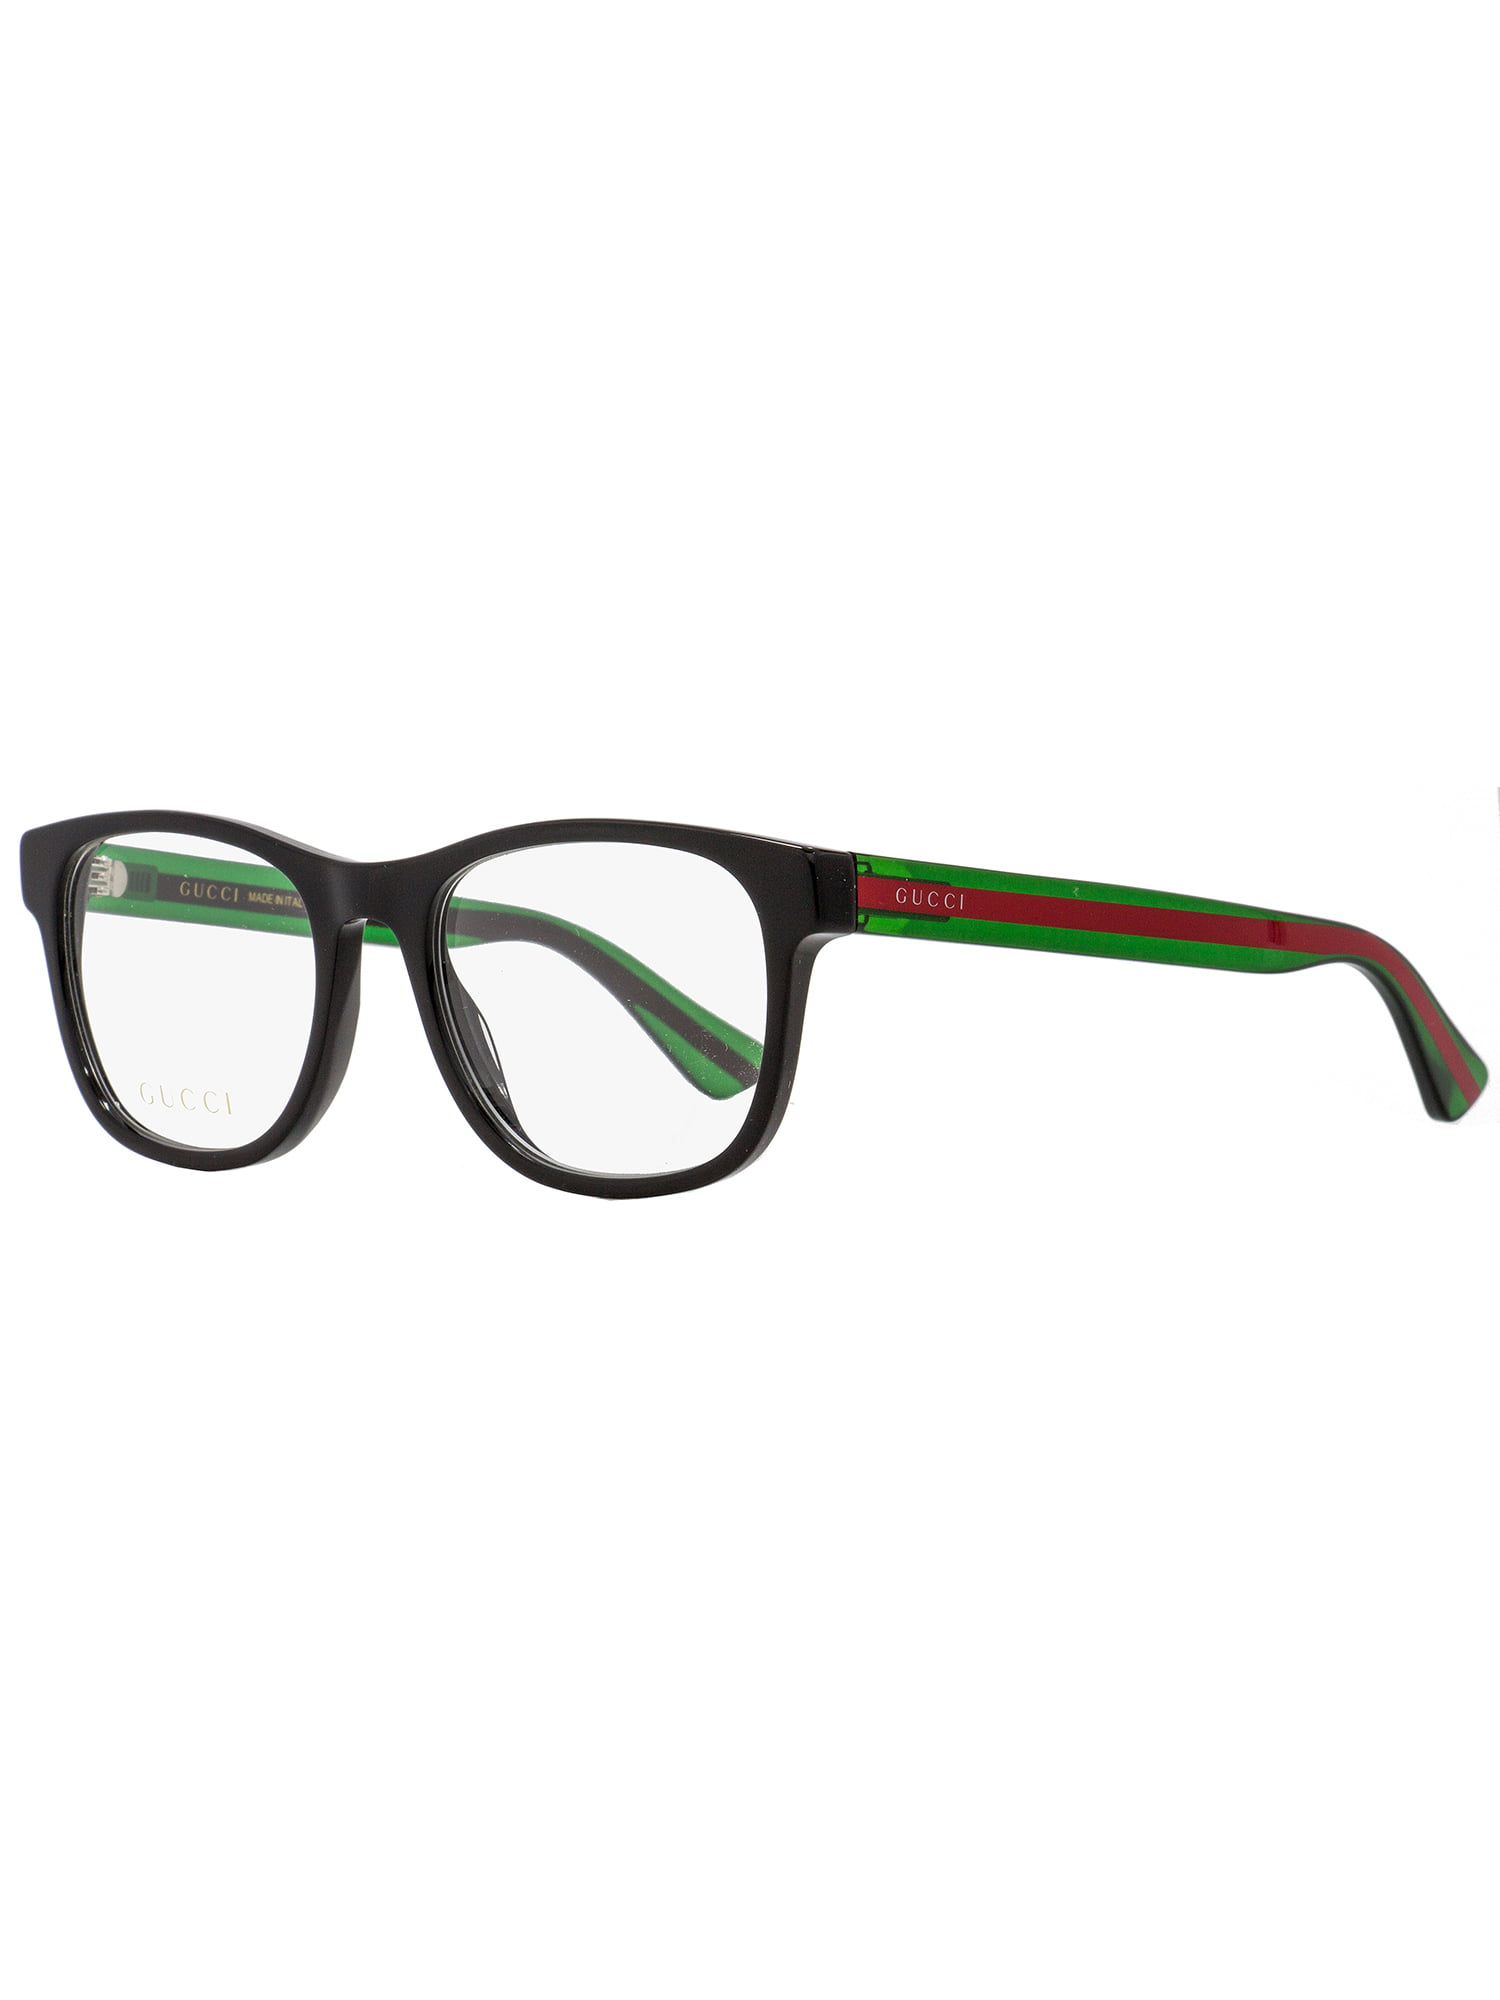 gucci green eyeglass frames